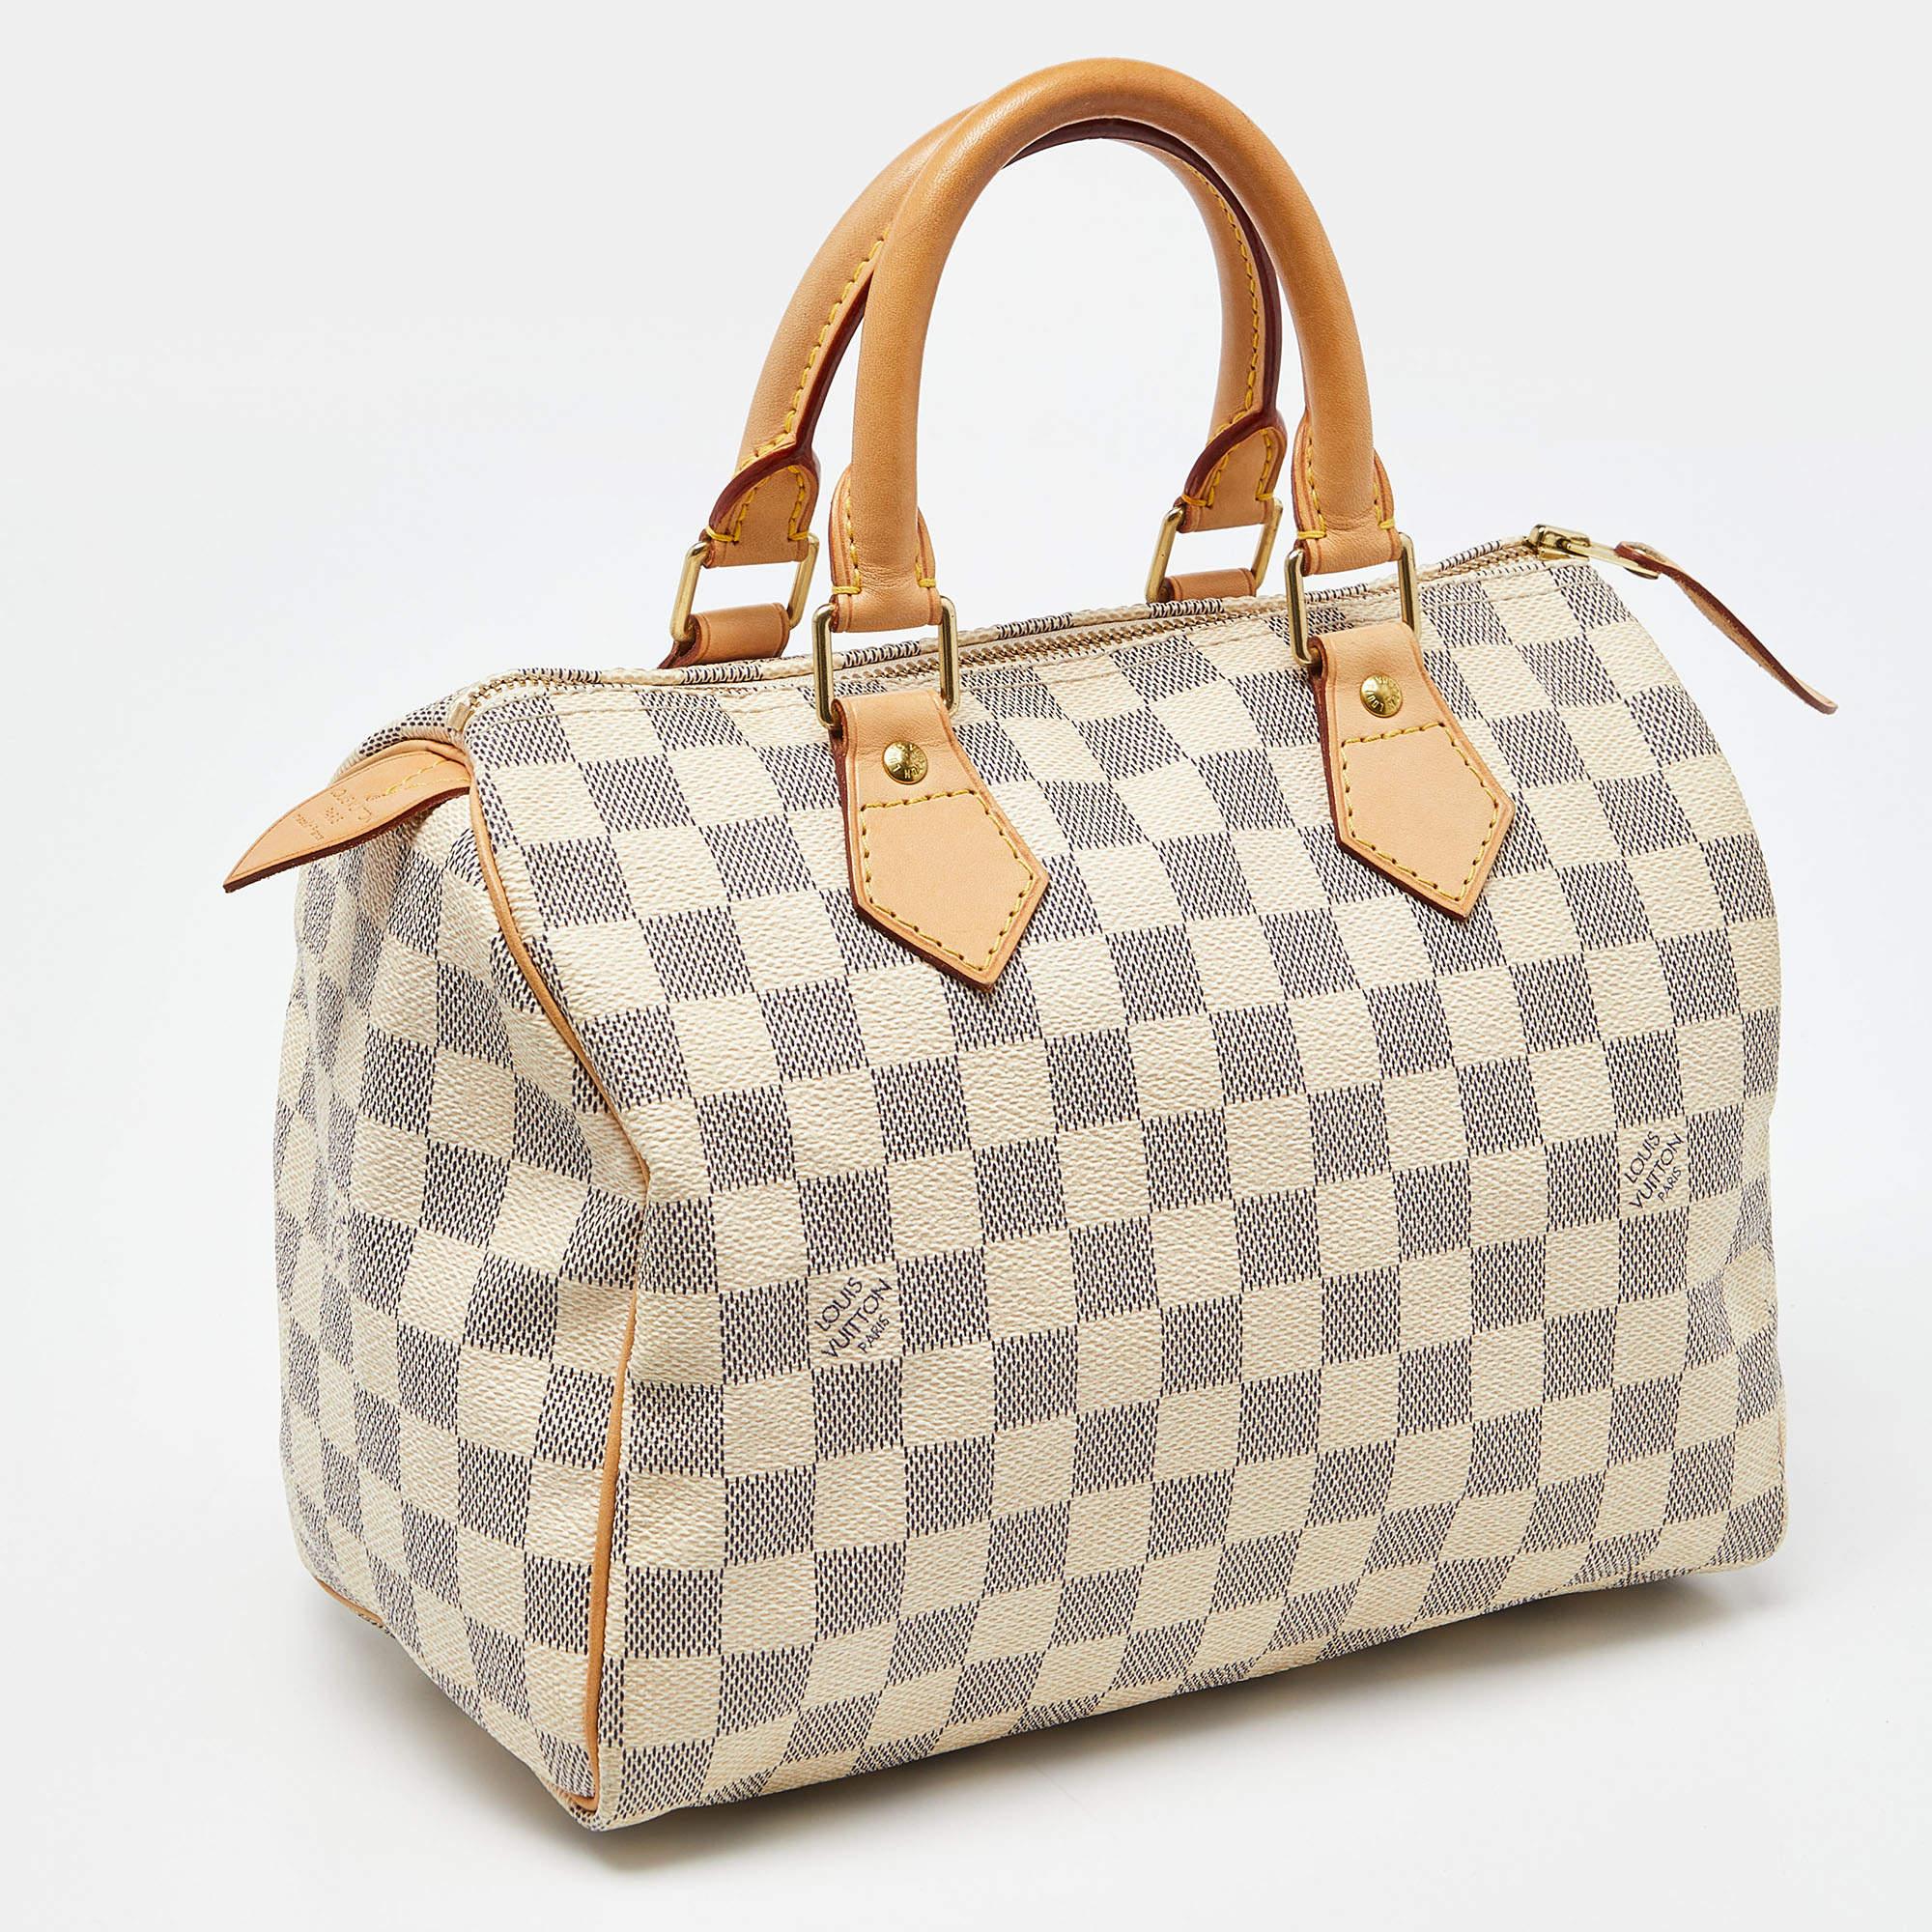 Louis Vuitton Damier Azur Canvas Speedy 25 Bag In Good Condition For Sale In Dubai, Al Qouz 2